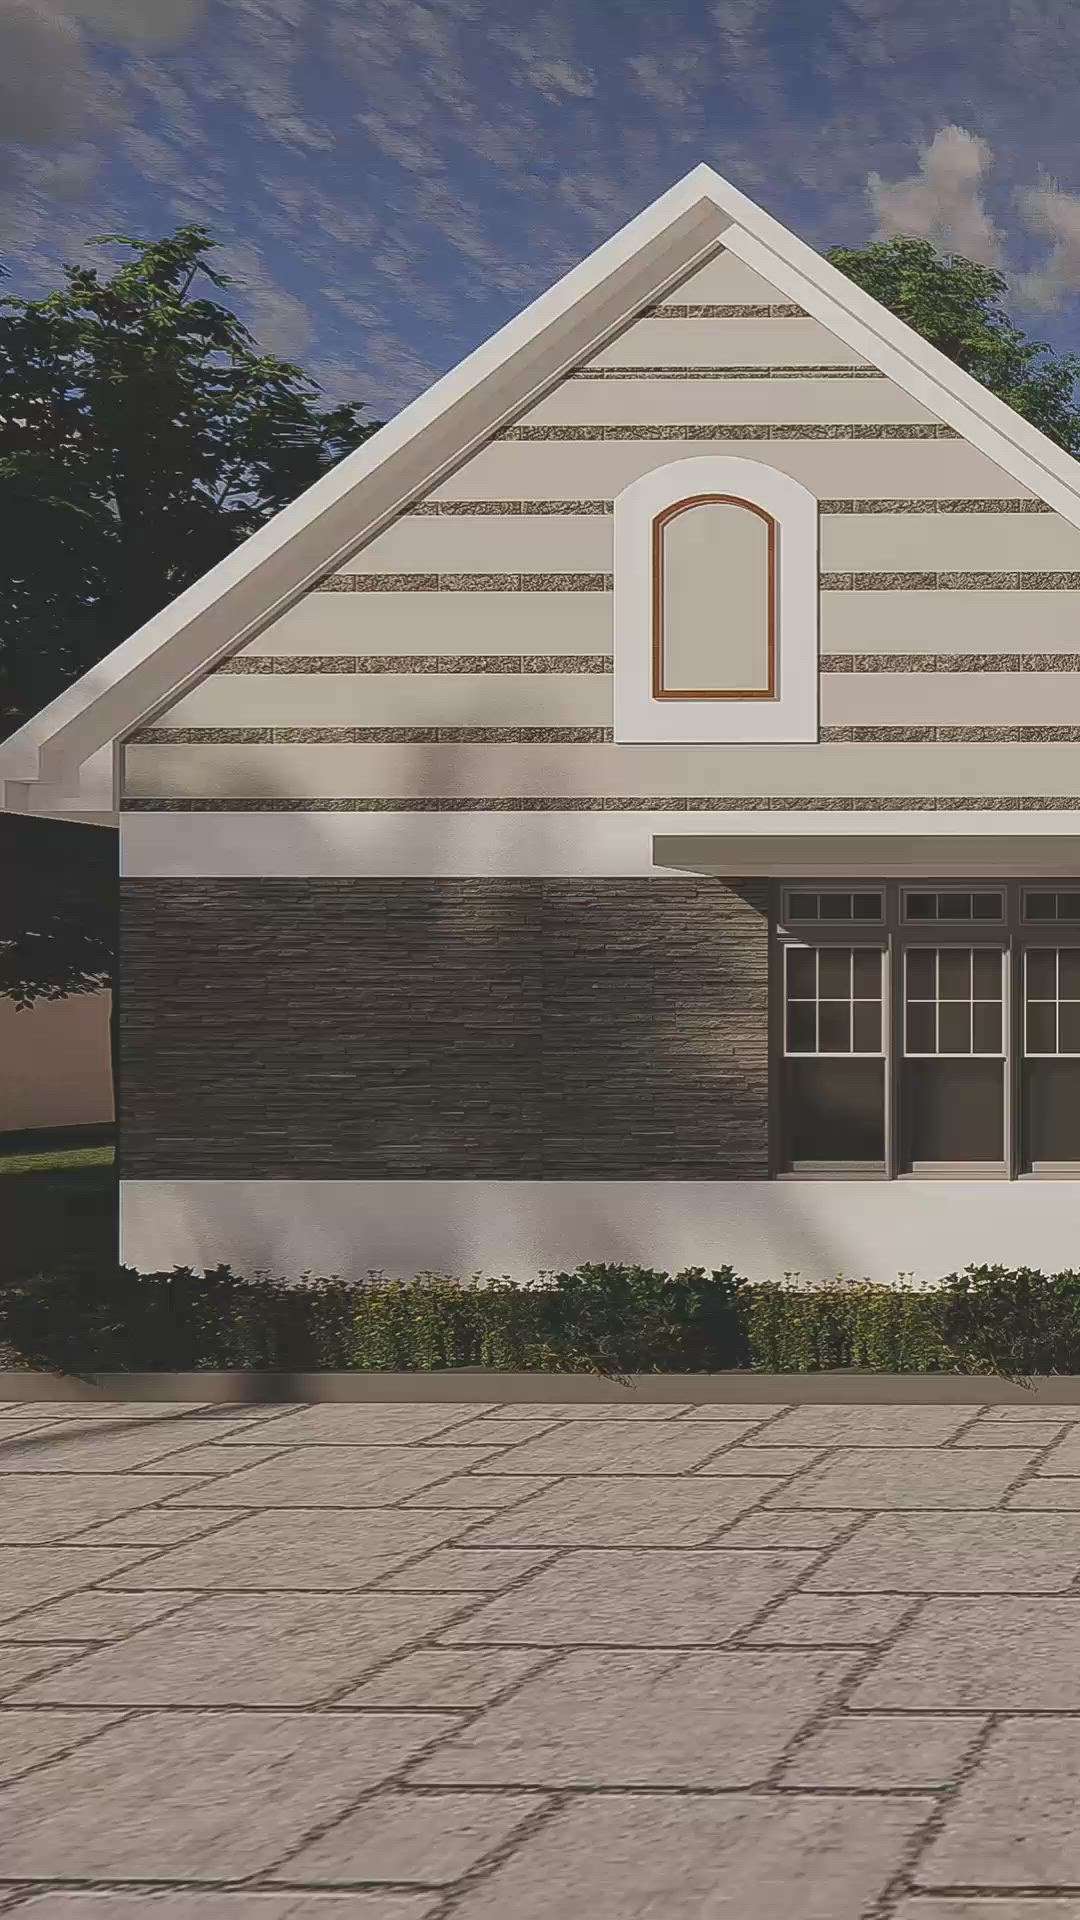 Project @ Kanjirapuzha
Area : 1890 sqft
4bhk

#HomeAutomation #ElevationHome #HomeDecor #SmallHouse #SmallHomePlans #Smallhousekerala #40LakhHouse #HouseDesigns #HouseConstruction #architectsinkerala #keraladesigns #EuropeanHouse #KeralaStyleHouse #keralaplanners #keralahomestyle #CivilEngineer #constructionsite #IndoorPlants #LandscapeGarden #3d #3DPlans #3dhouse #3dmodeling #3Dhome #renderingdesign  #rendering  #rendering3d #Architect #architecturedesigns #Architectural&Interior #architectureldesigns #architectsinkerala #arch #visualization #HouseDesigns #ElevationDesign #ground #budgethomes